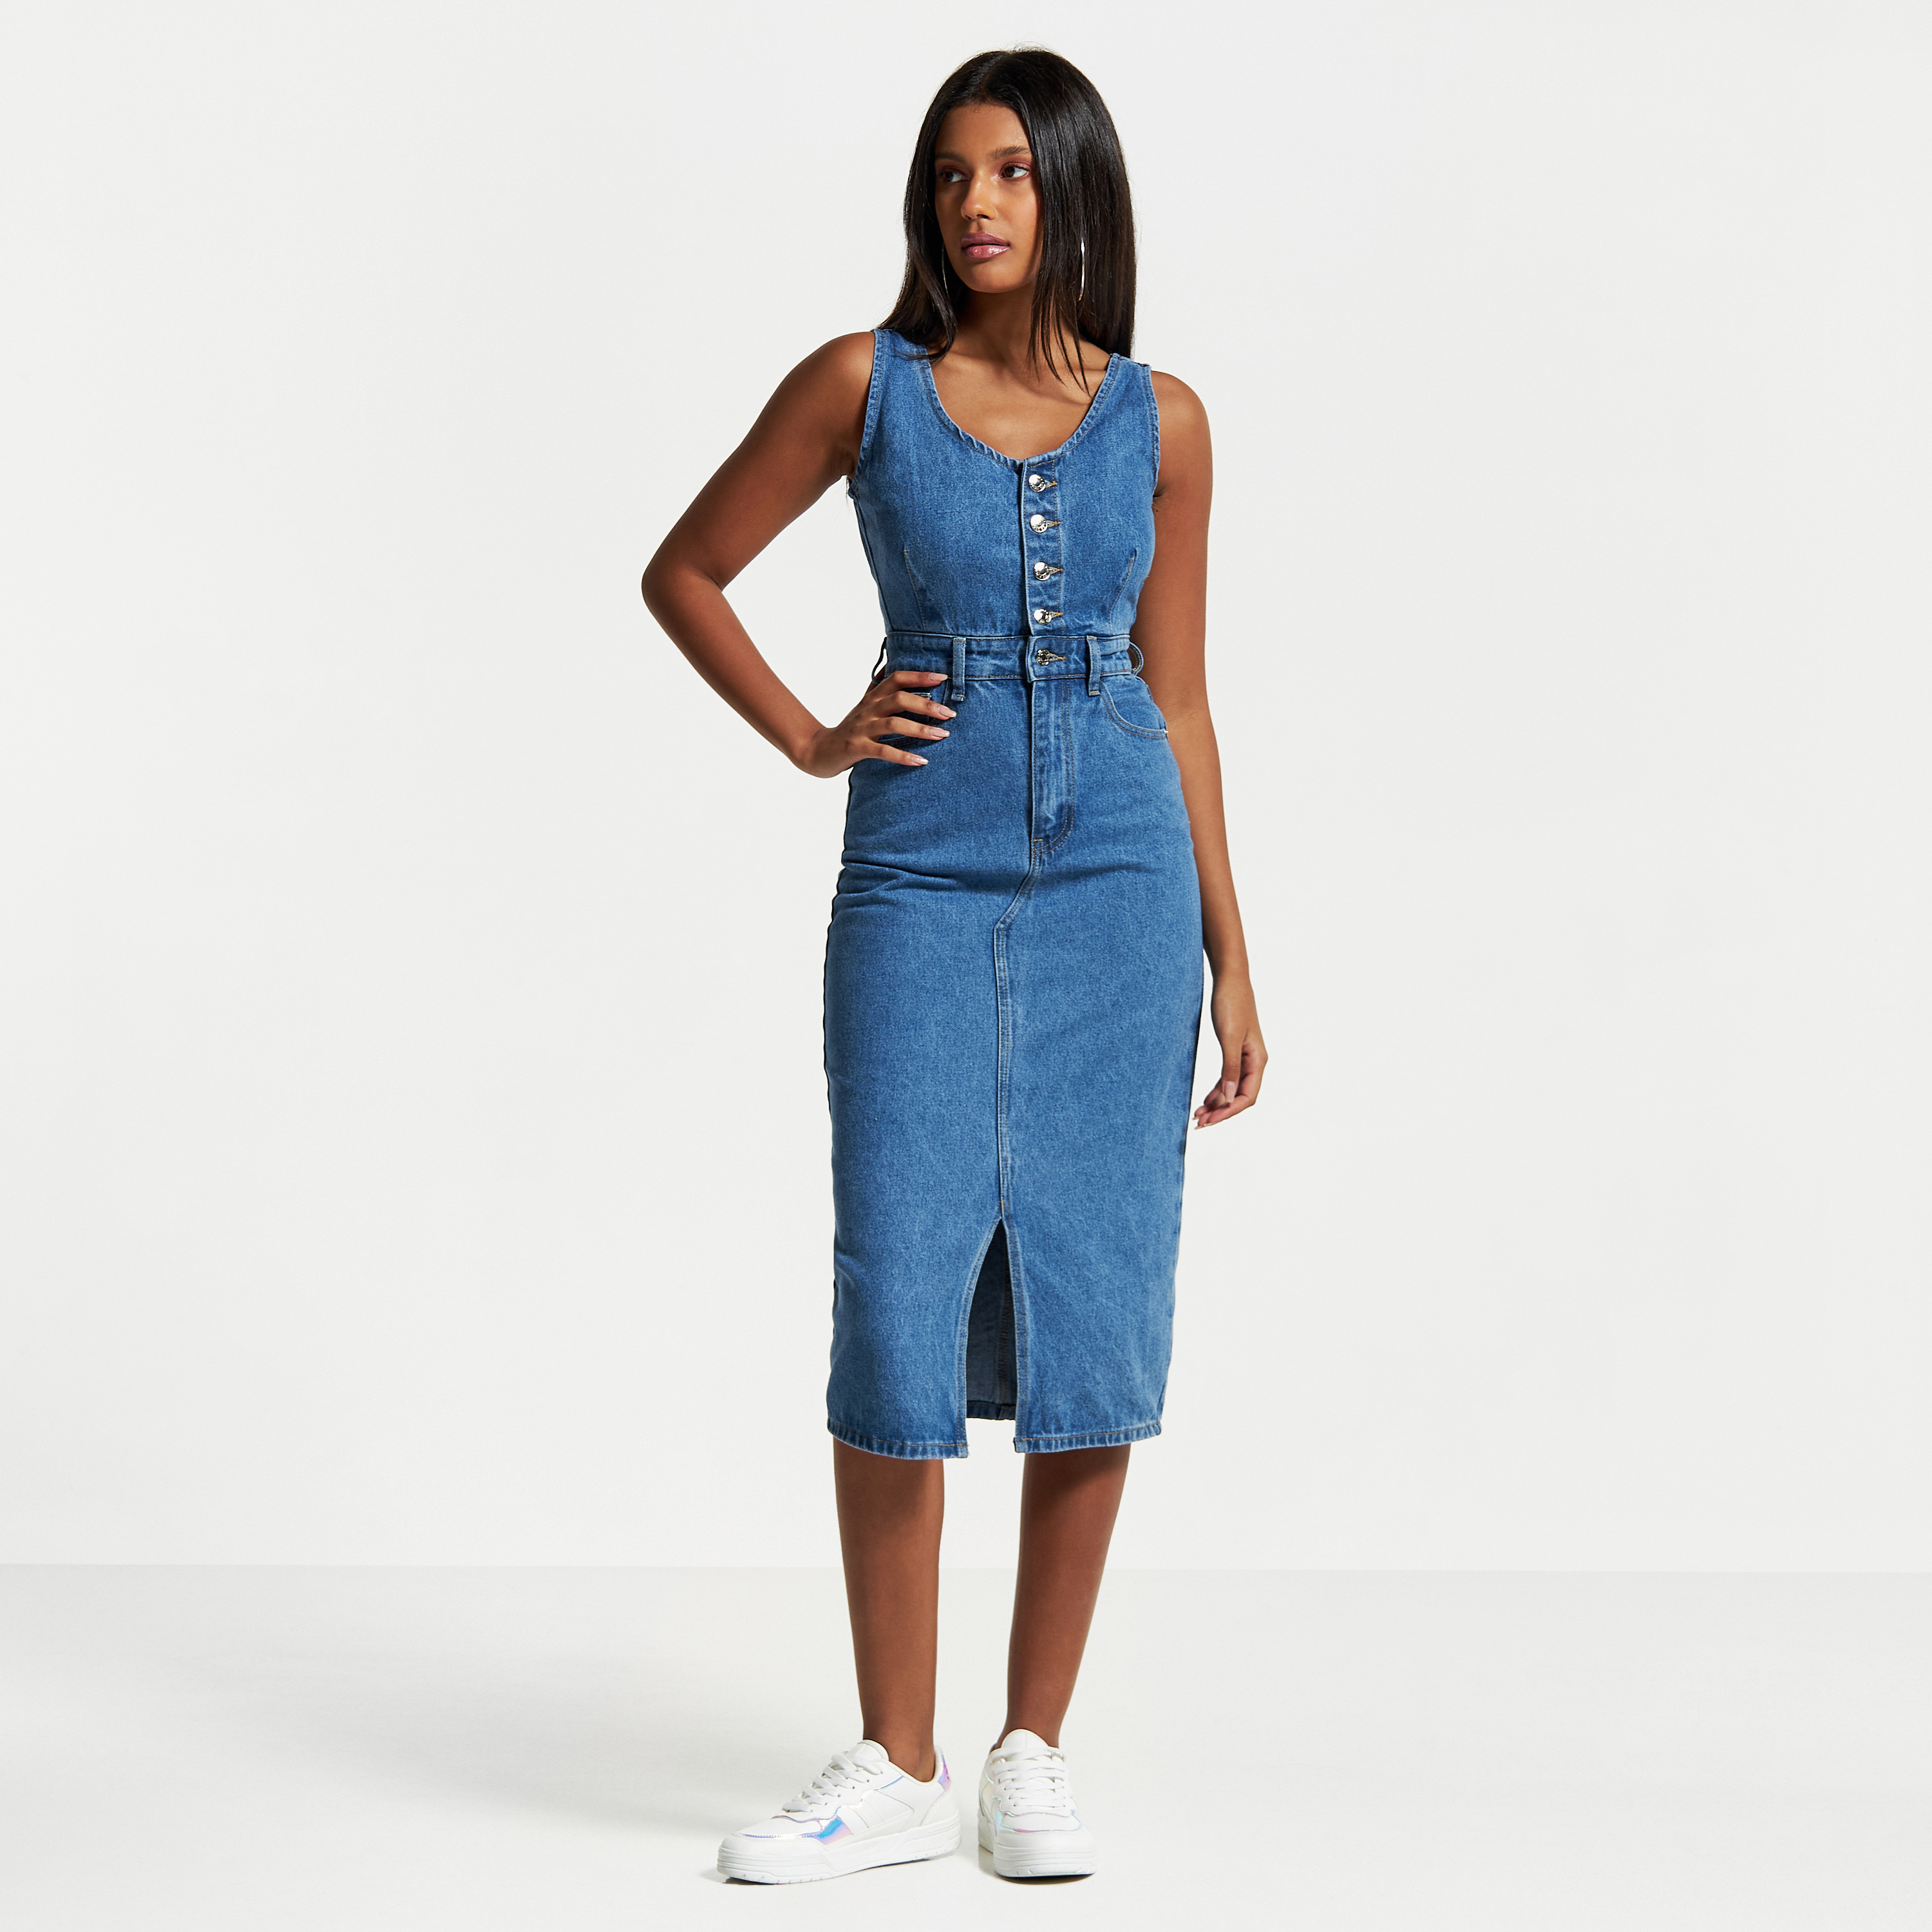 Buy LookbookStore Women's Blue Sleeveless V Neck Button Down Short Denim  Dress Size S at Amazon.in